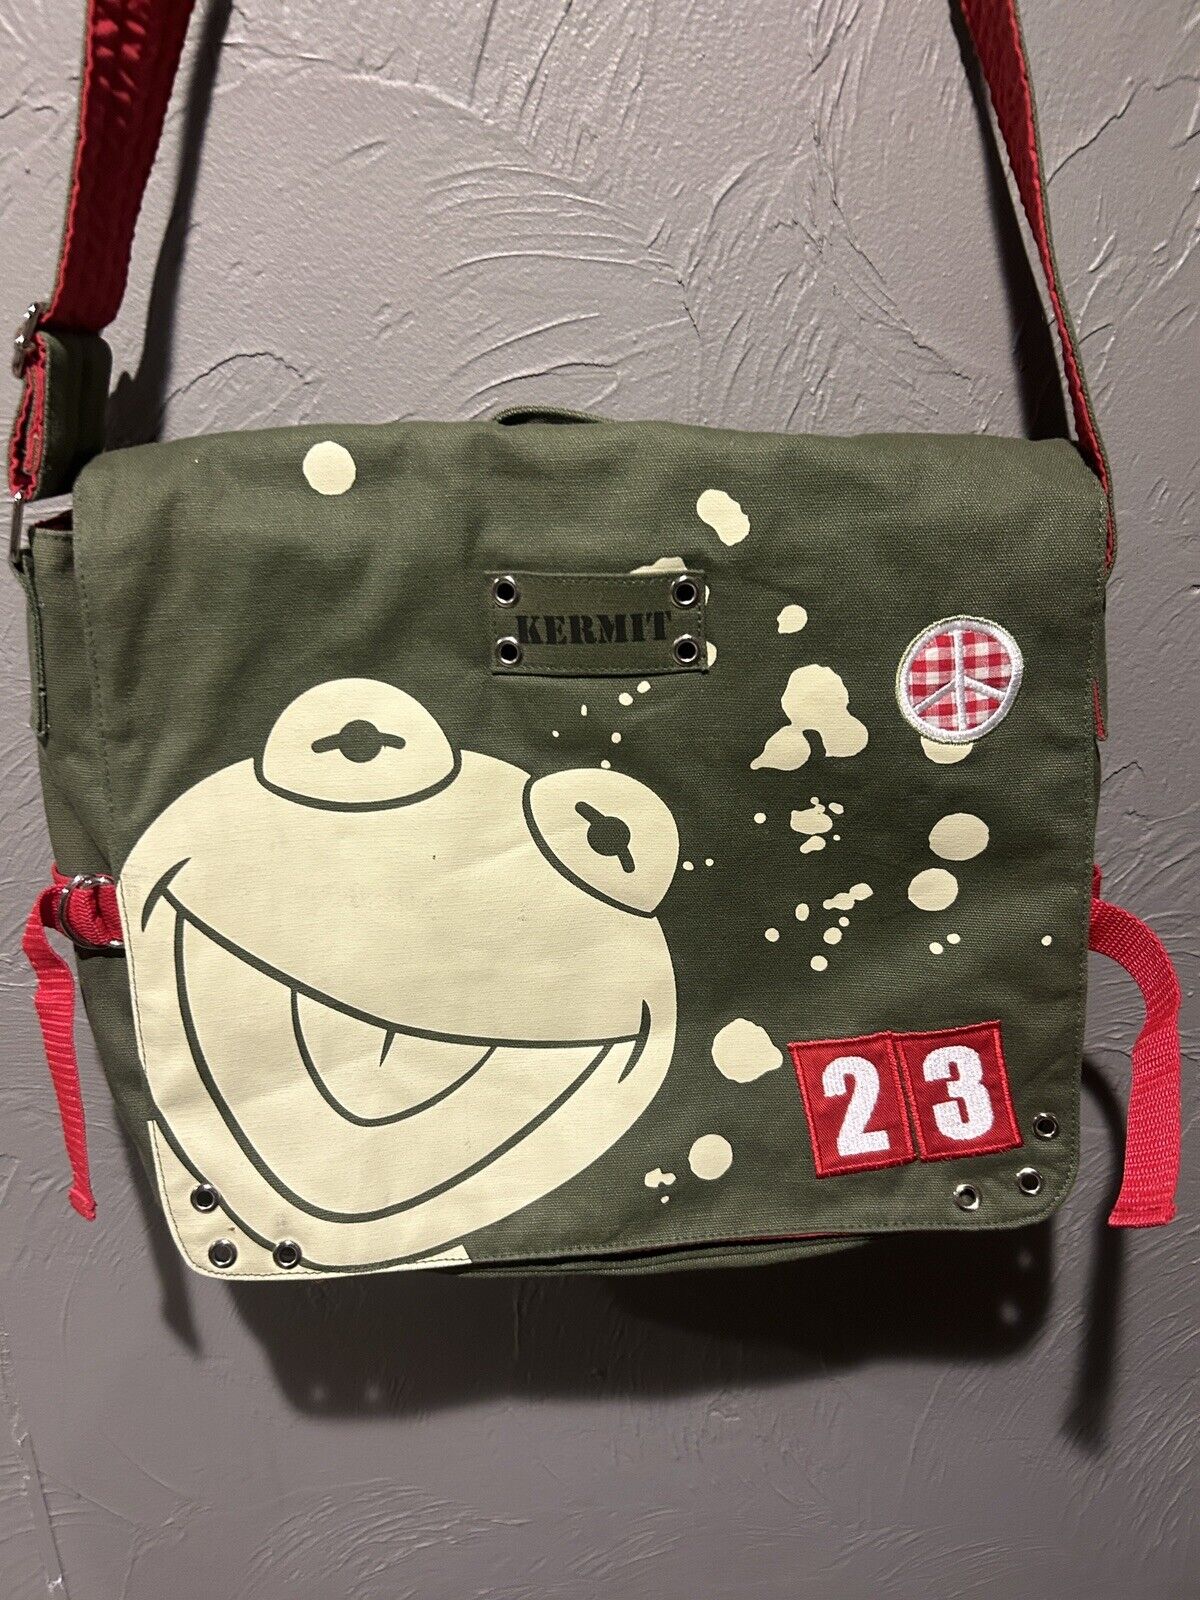 Muppets Kermit The Frog Messenger Bag Peace 23 Canvas - Travel - Crossbody